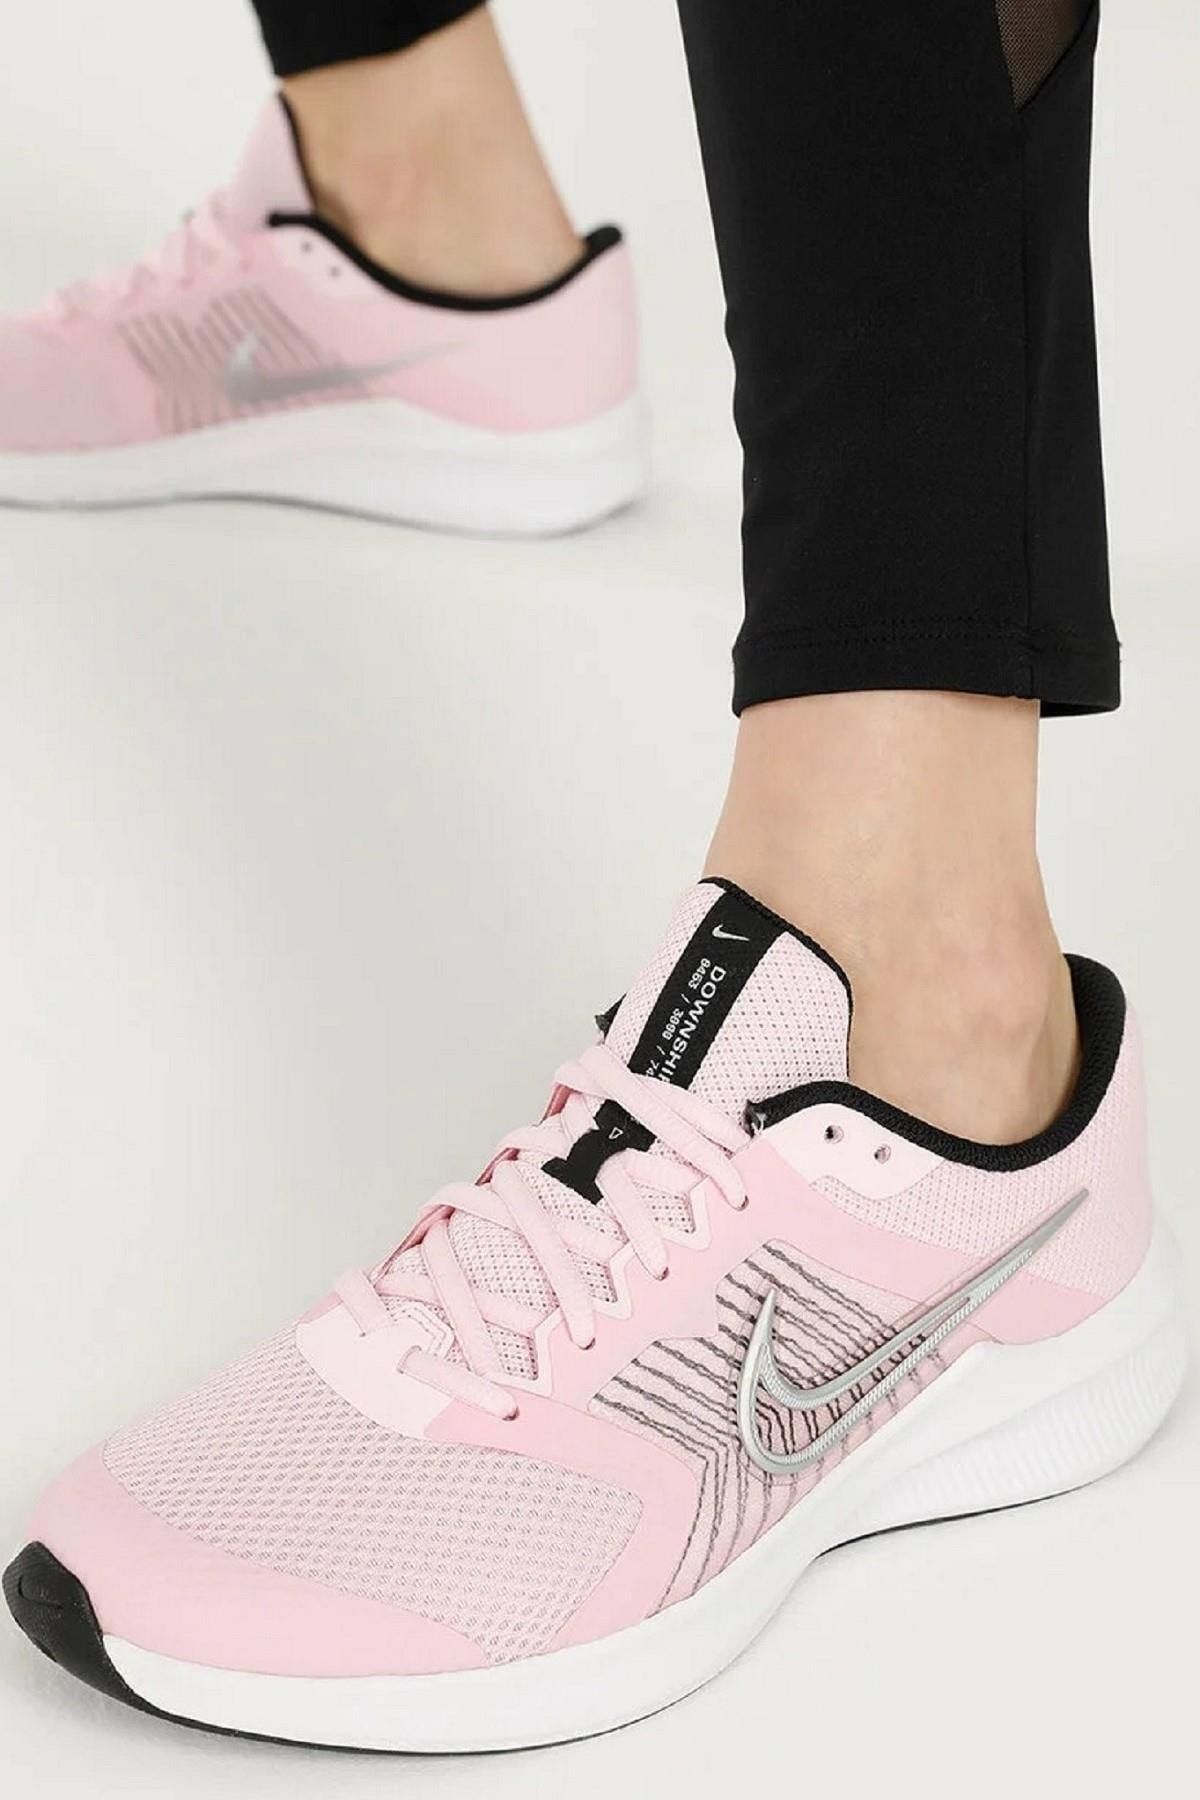 Nike Downshifter 11 G. S. Running Pink Pembe Yürüyüş Koşu Ayakkabısı Cz